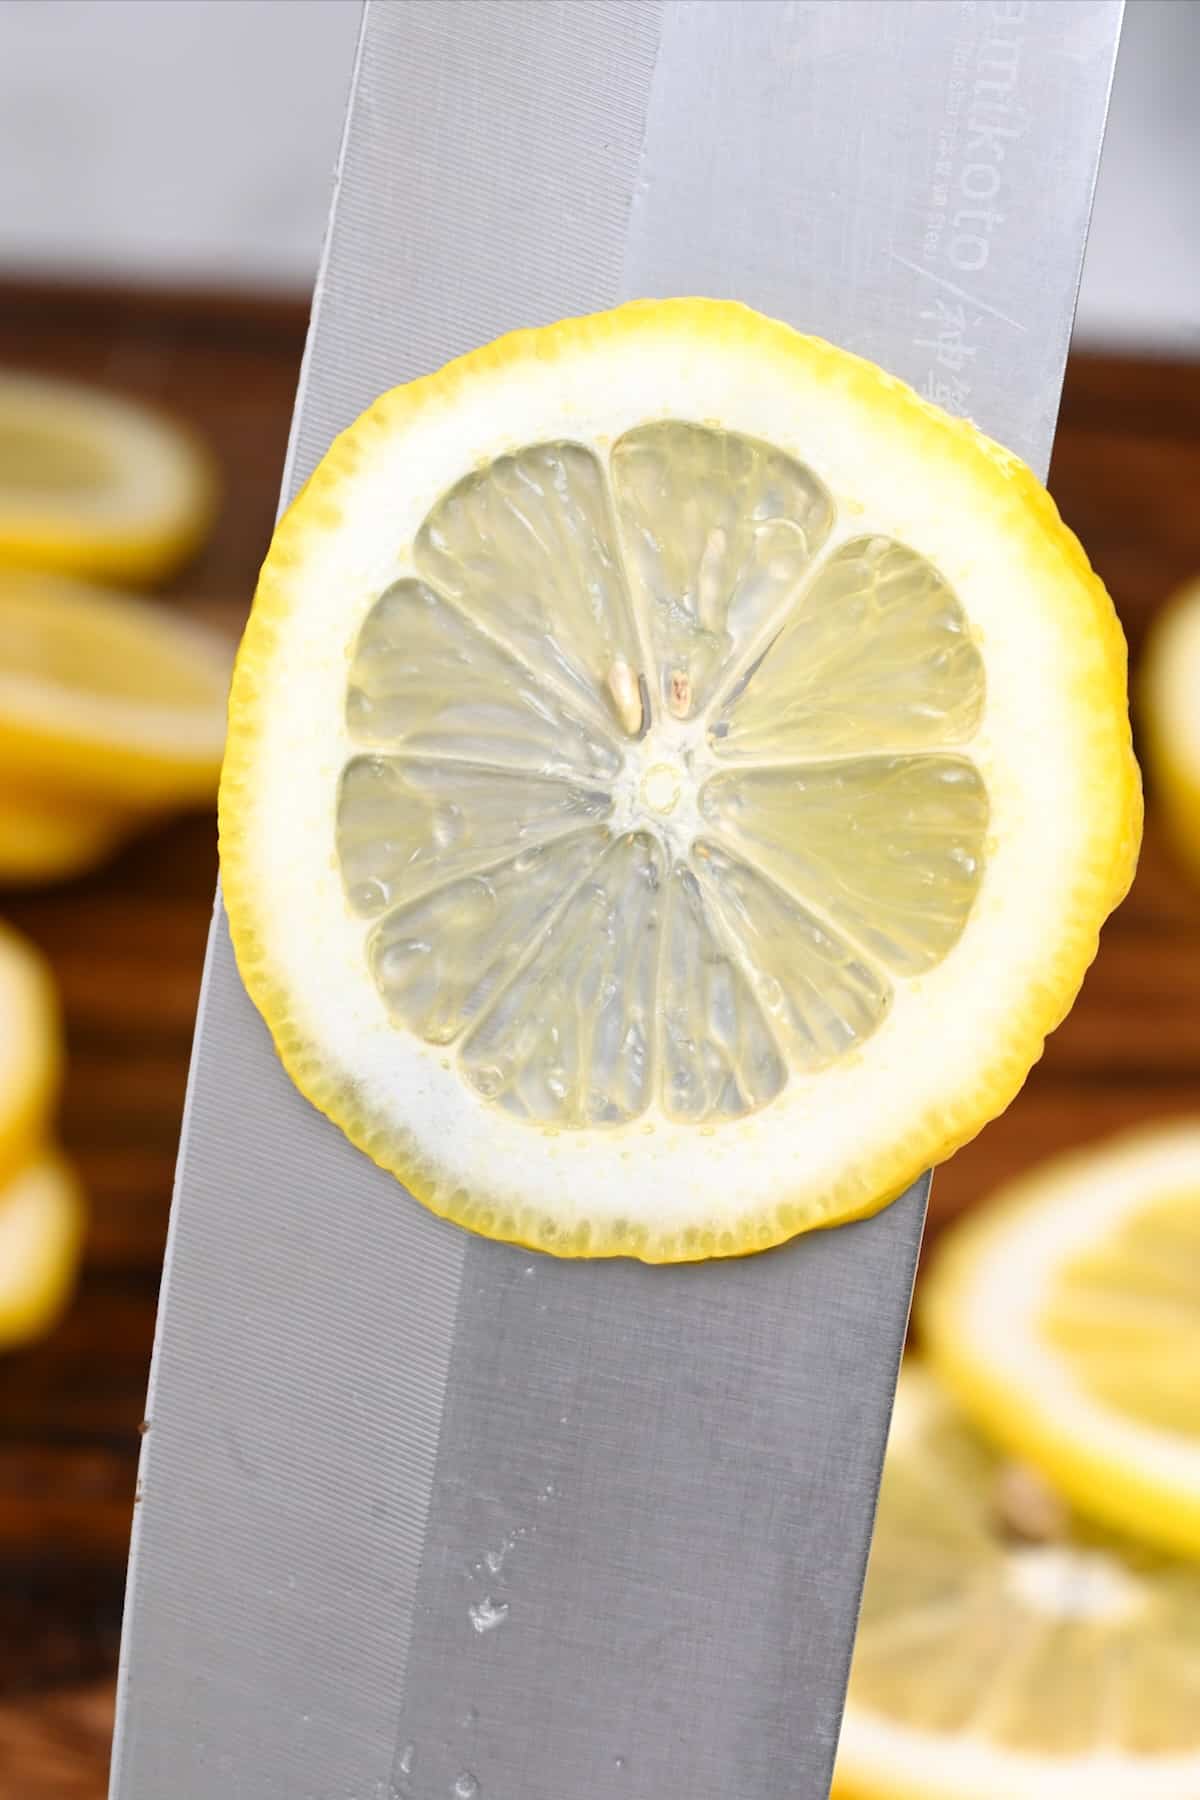 Thin slice of lemon